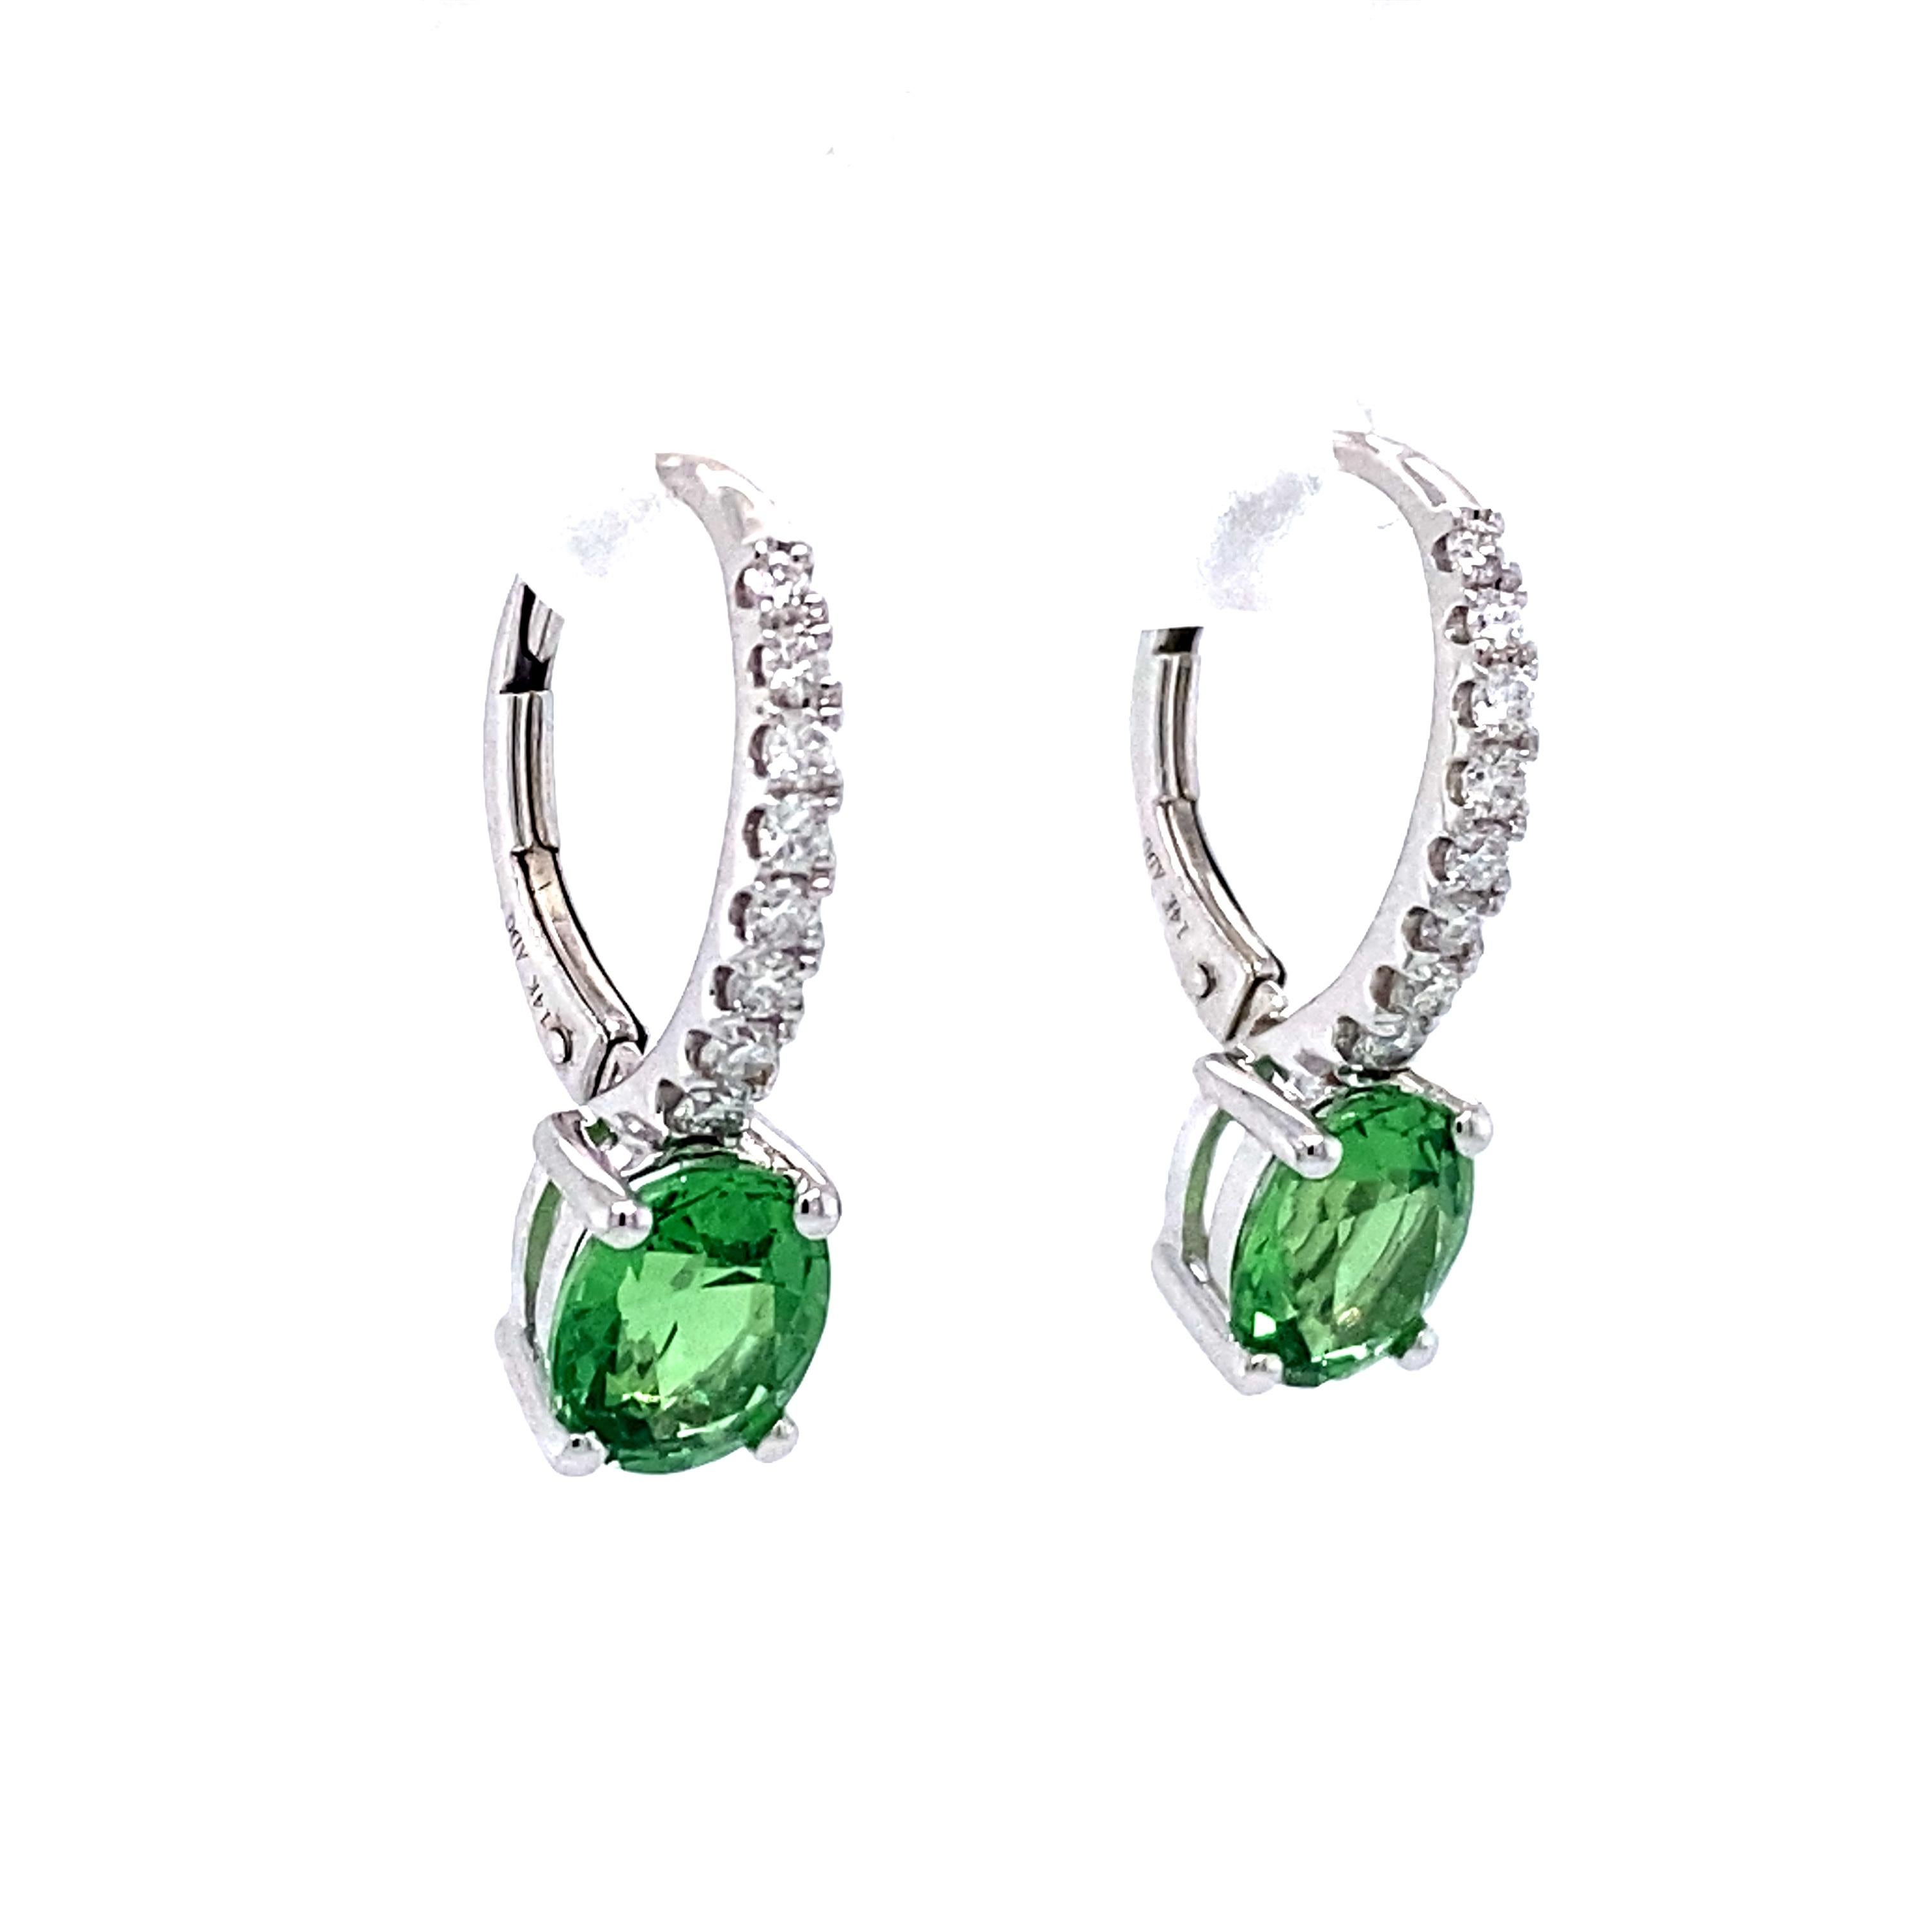 Oval Cut 2 Carat Oval Peridot and Diamond Earrings in 14 Karat White Gold For Sale